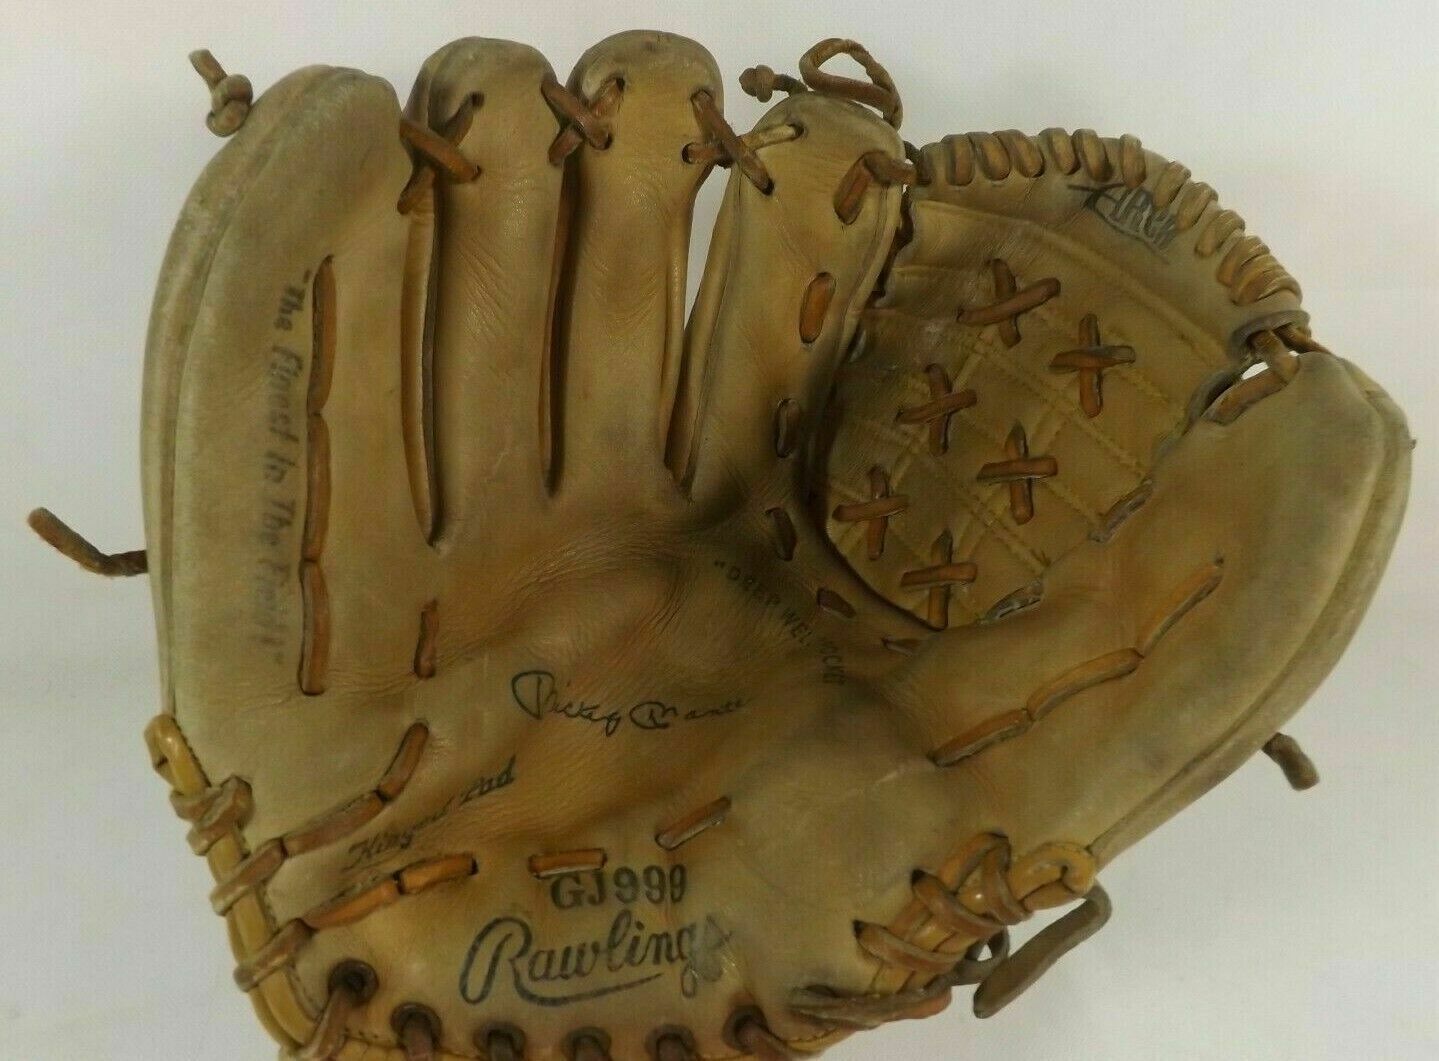 1960s 70s Mickey Mantle Rawlings Mitt Model Gj999 Vintage Glove New York Yankees